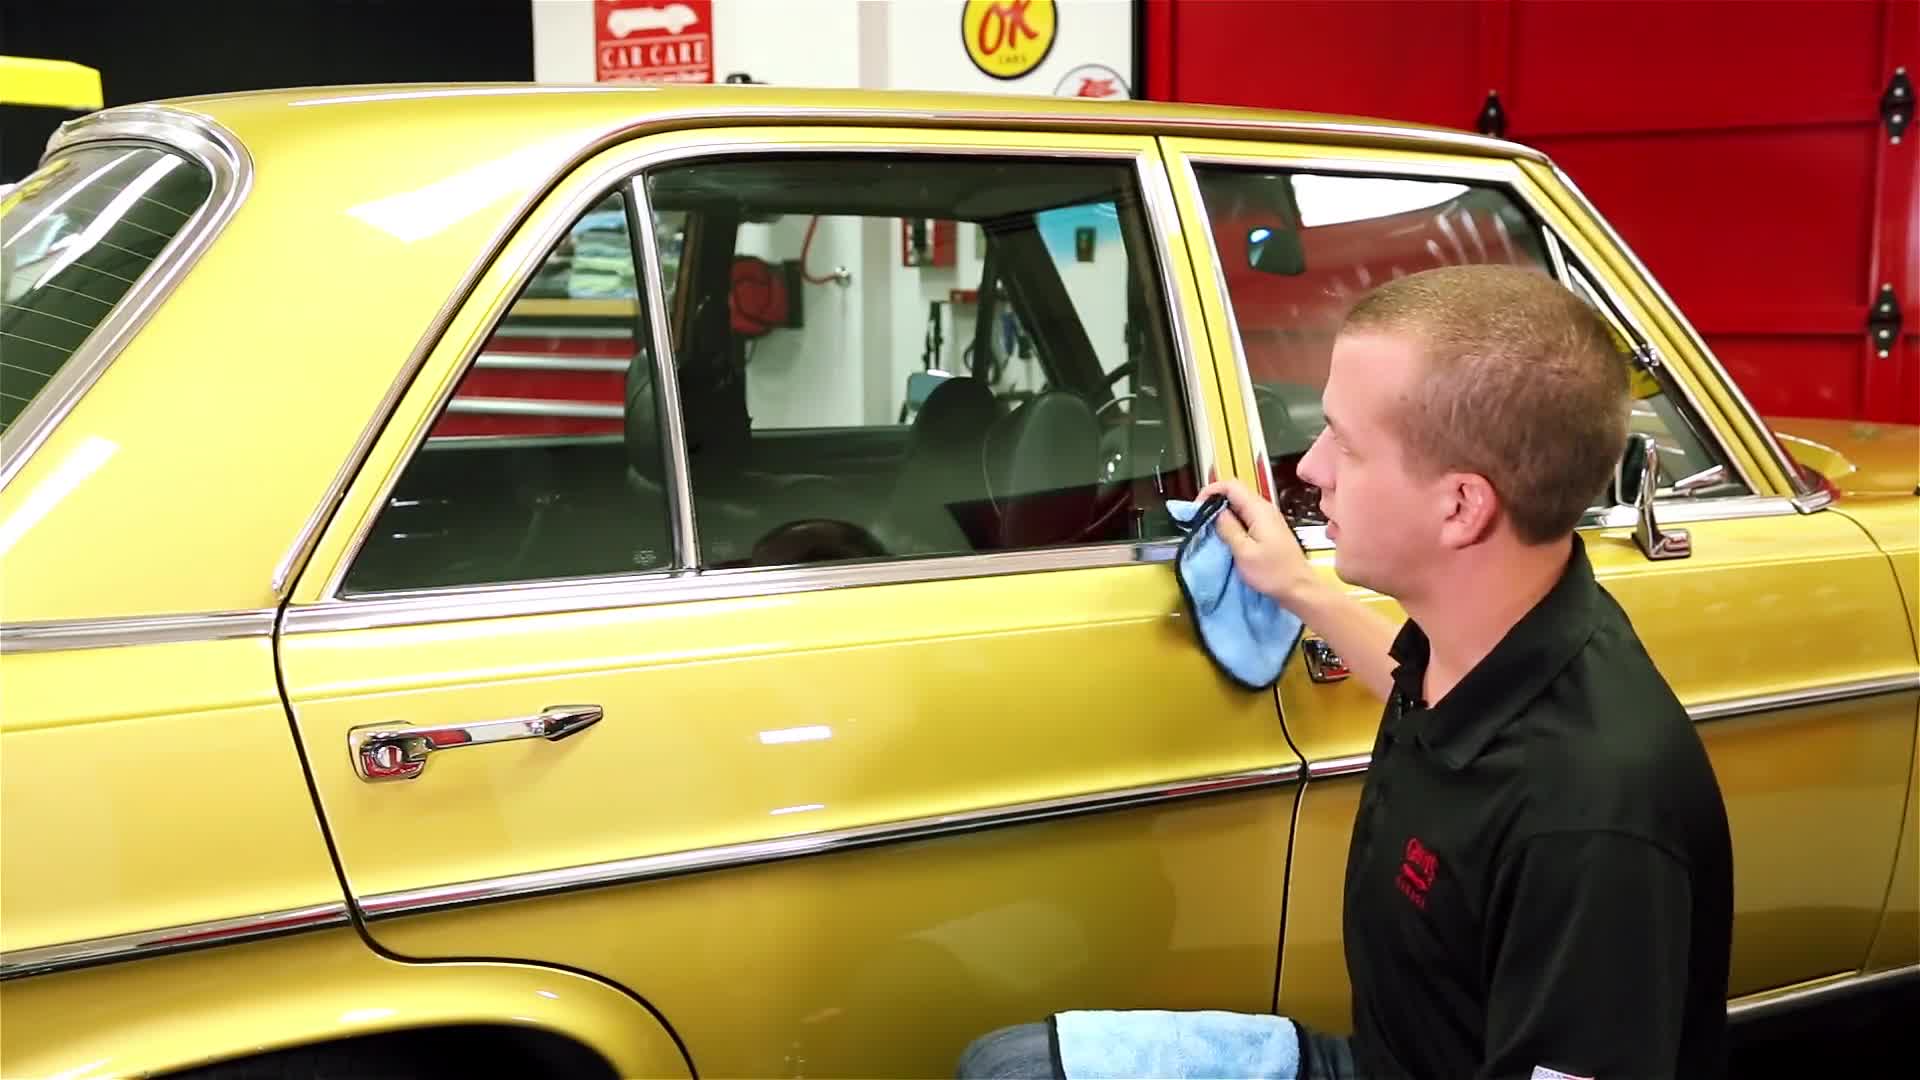 Ultra-Premium Auto Glass Cleaner 19 oz - Griot's Garage